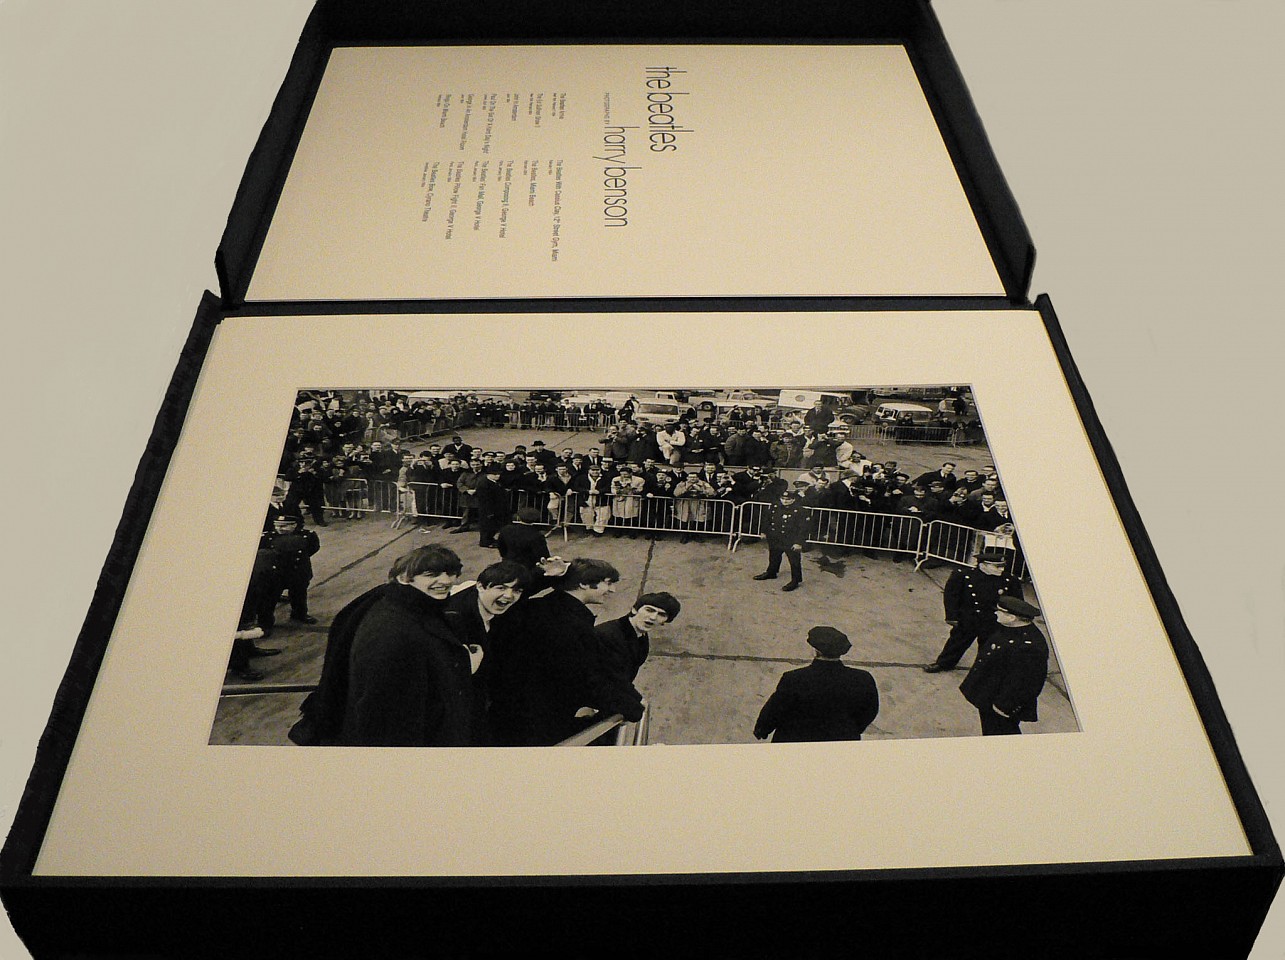 Harry Benson, The Beatles 40th Anniversary Portfolio, 1964
Boxed Set of Archival Pigment Prints